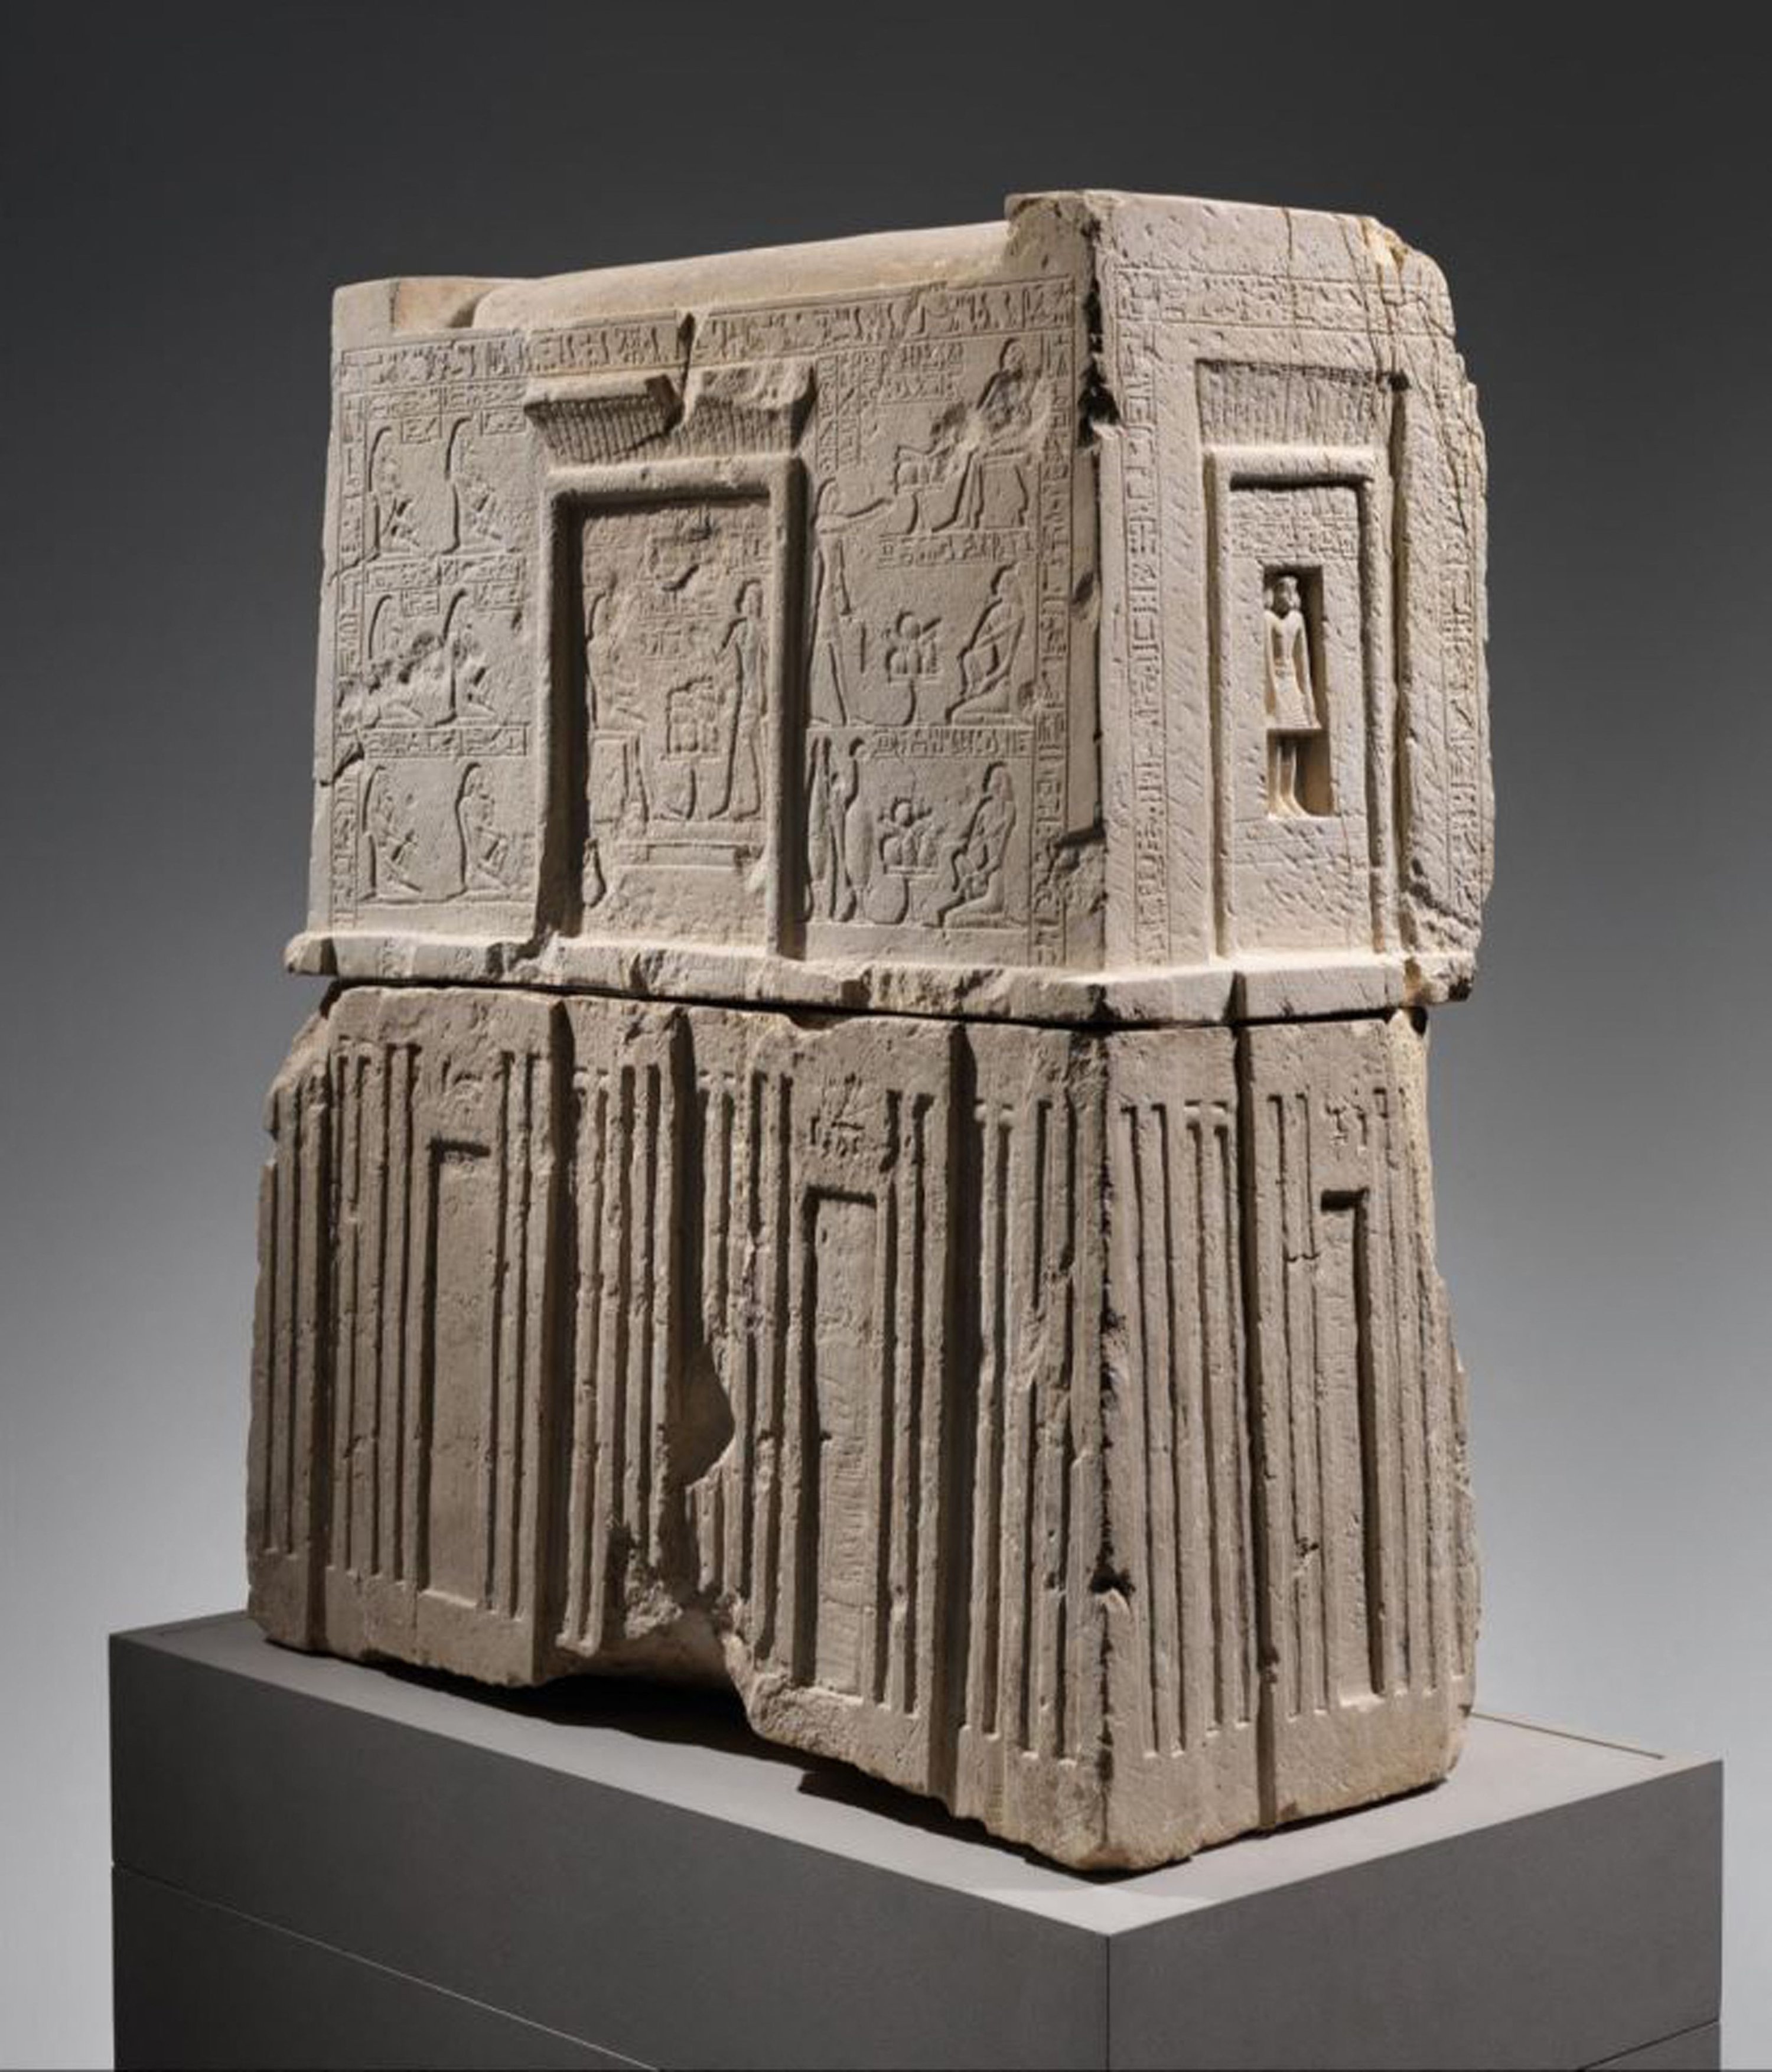 Sebuah model kuburan batu kapur Mesir tertanggal 1750-1720 SM dan bernilai sekitar $251.725 terlihat dalam gambar bukti yang dirilis dalam surat perintah penggeledahan oleh Mahkamah Agung Negara Bagian New York pada 19 Mei 2022. (AFP Photo)